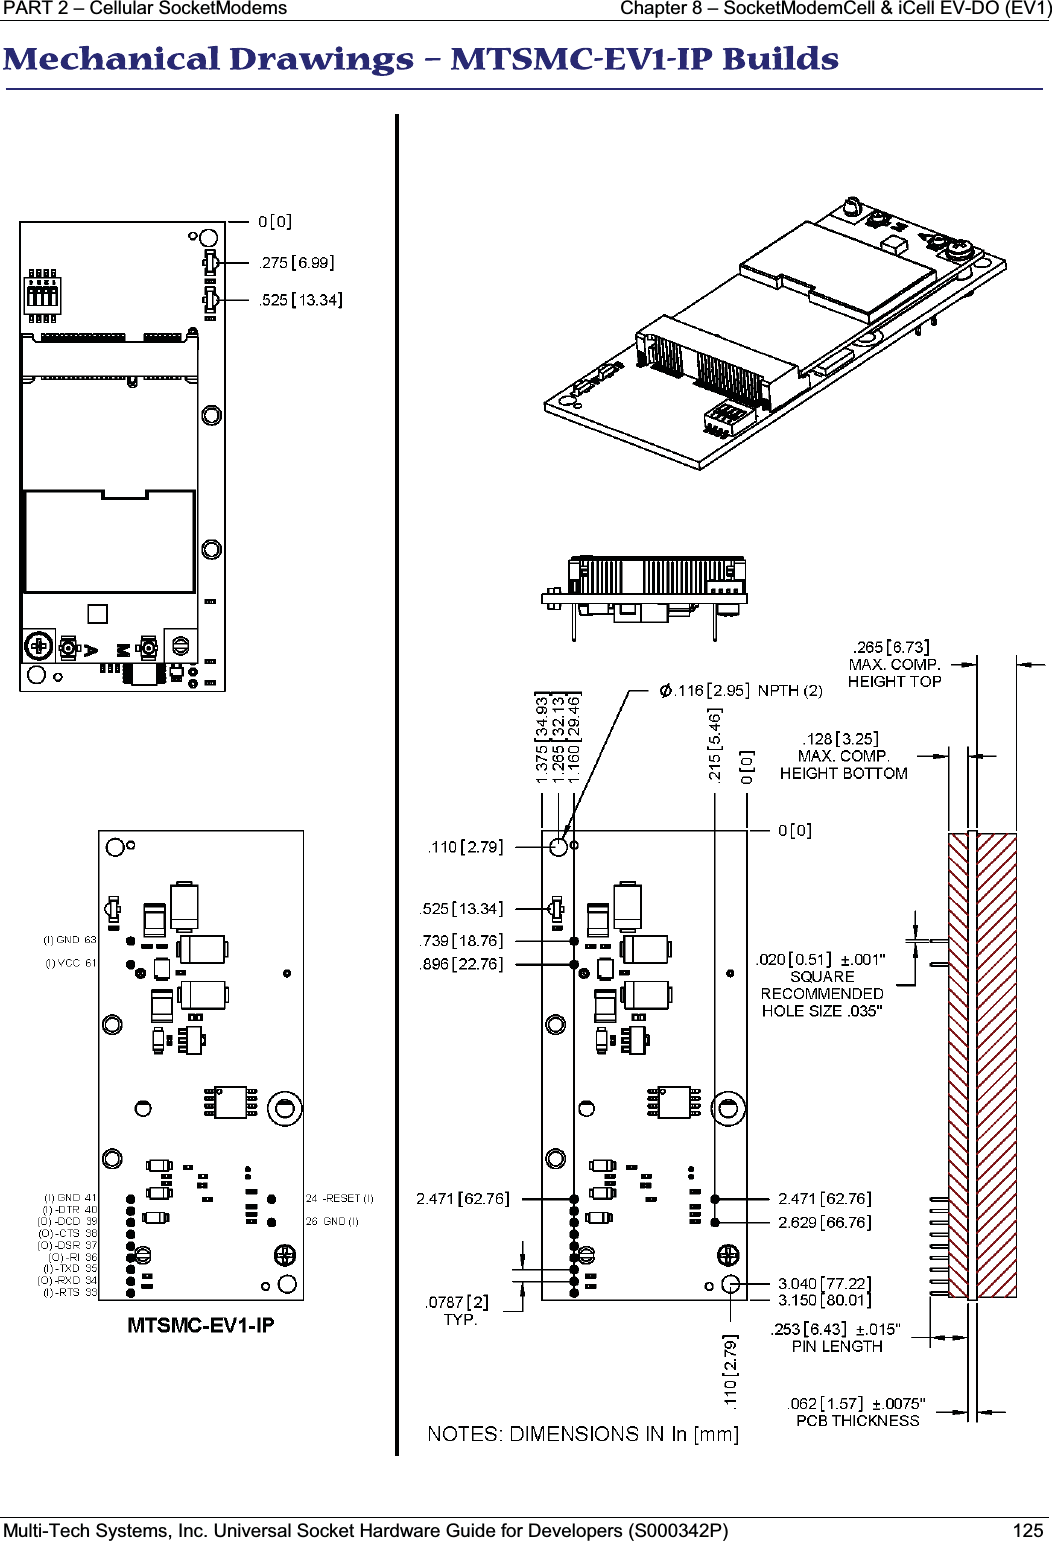 PART 2 – Cellular SocketModems Chapter 8 – SocketModemCell &amp; iCell EV-DO (EV1)Multi-Tech Systems, Inc. Universal Socket Hardware Guide for Developers (S000342P) 125MMechanical Drawings – MTSMC-EV1-IP Builds 